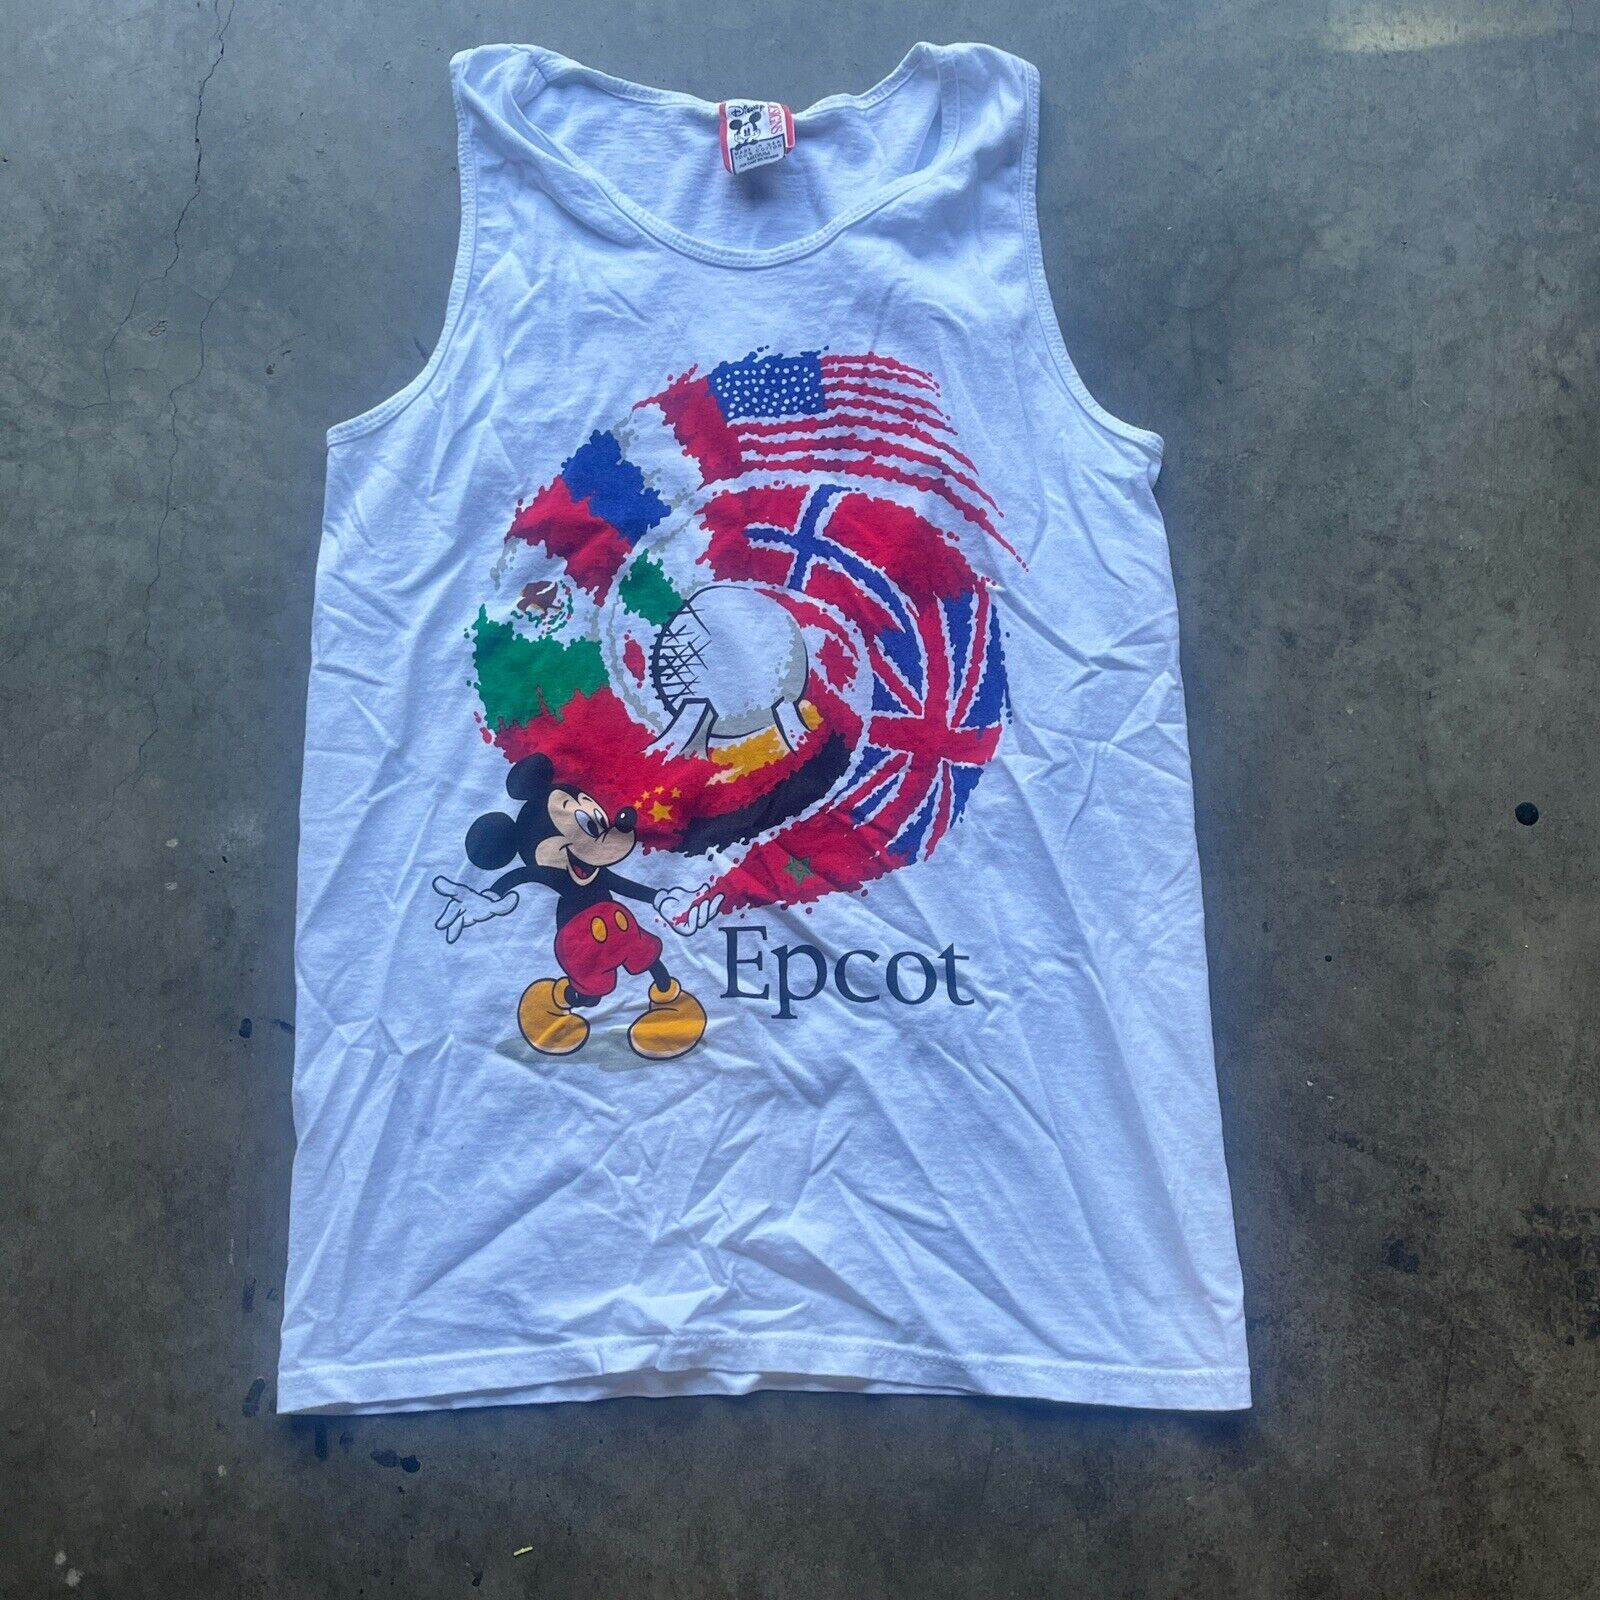 Vintage 1990s Disney Epcot shirt tank top white - medium